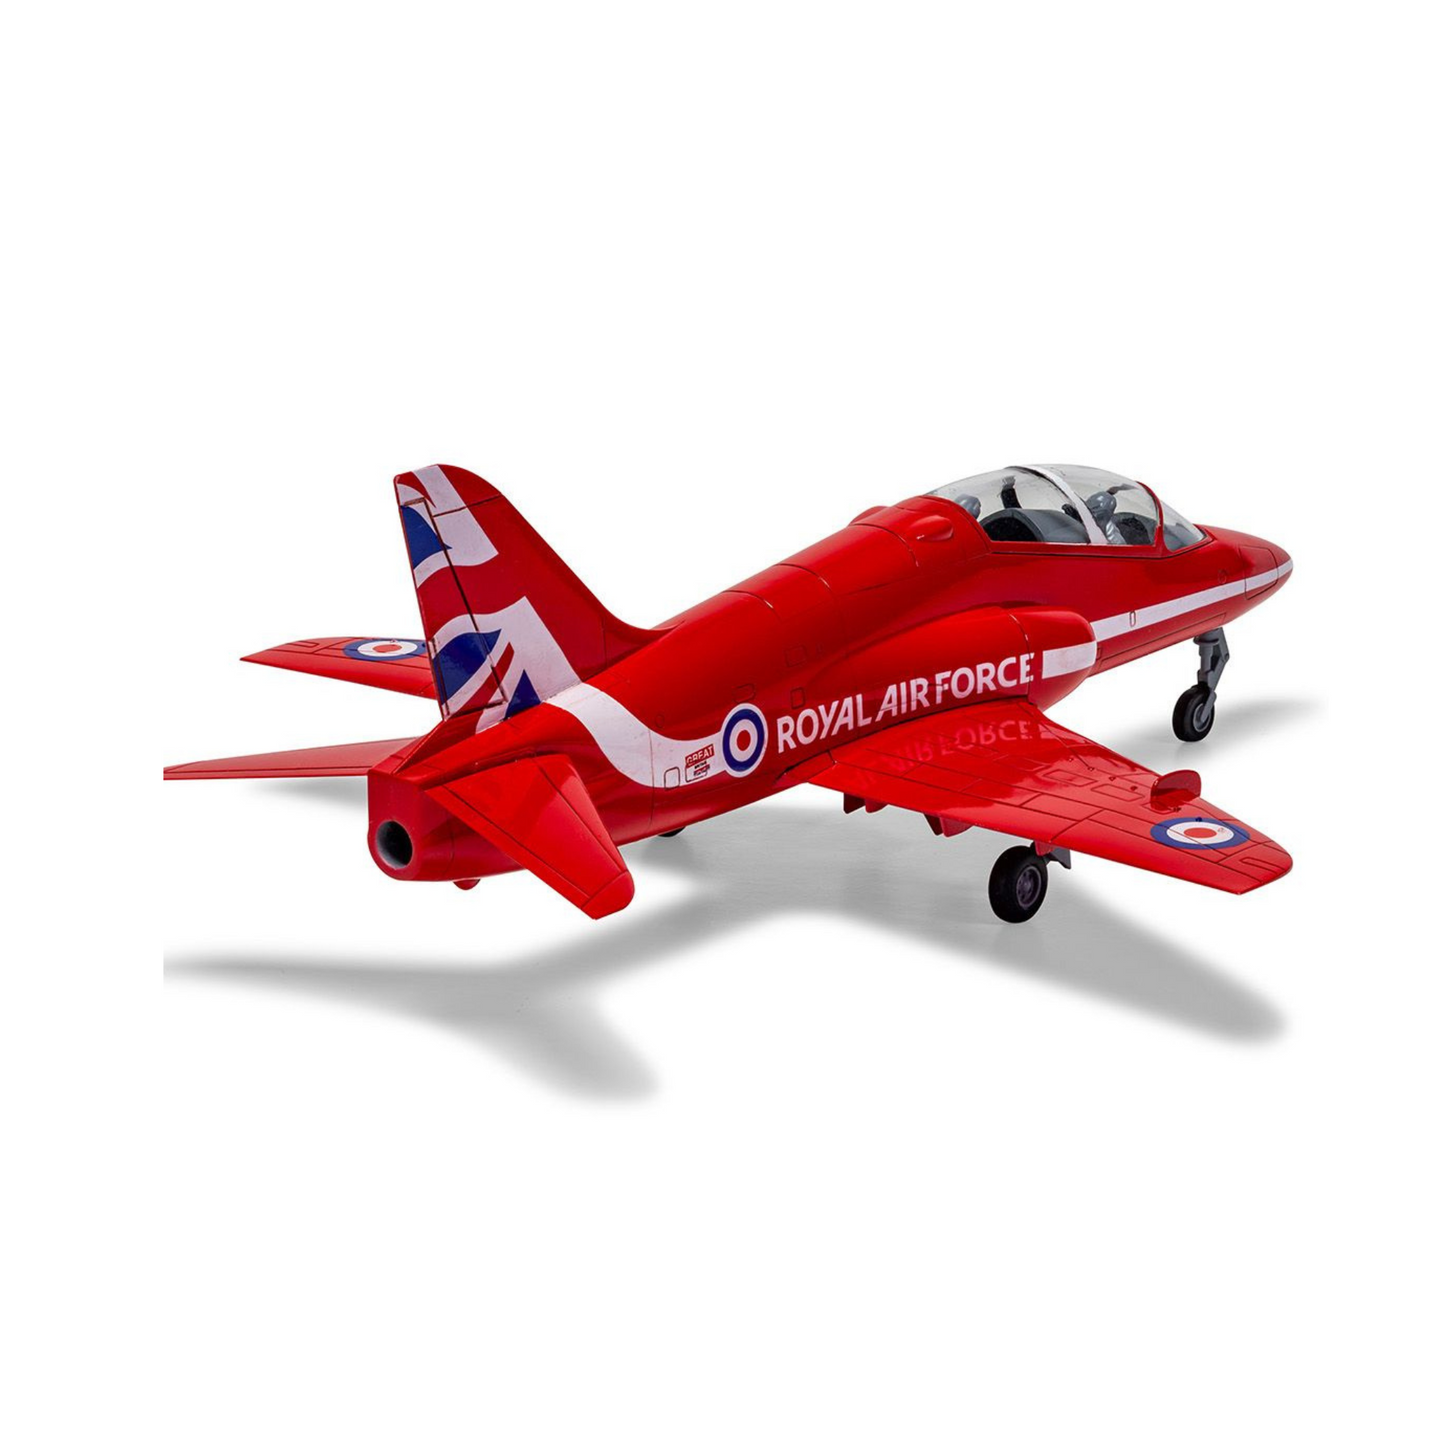 Airfix Starter Set RAF Red Arrows Hawk 1:72